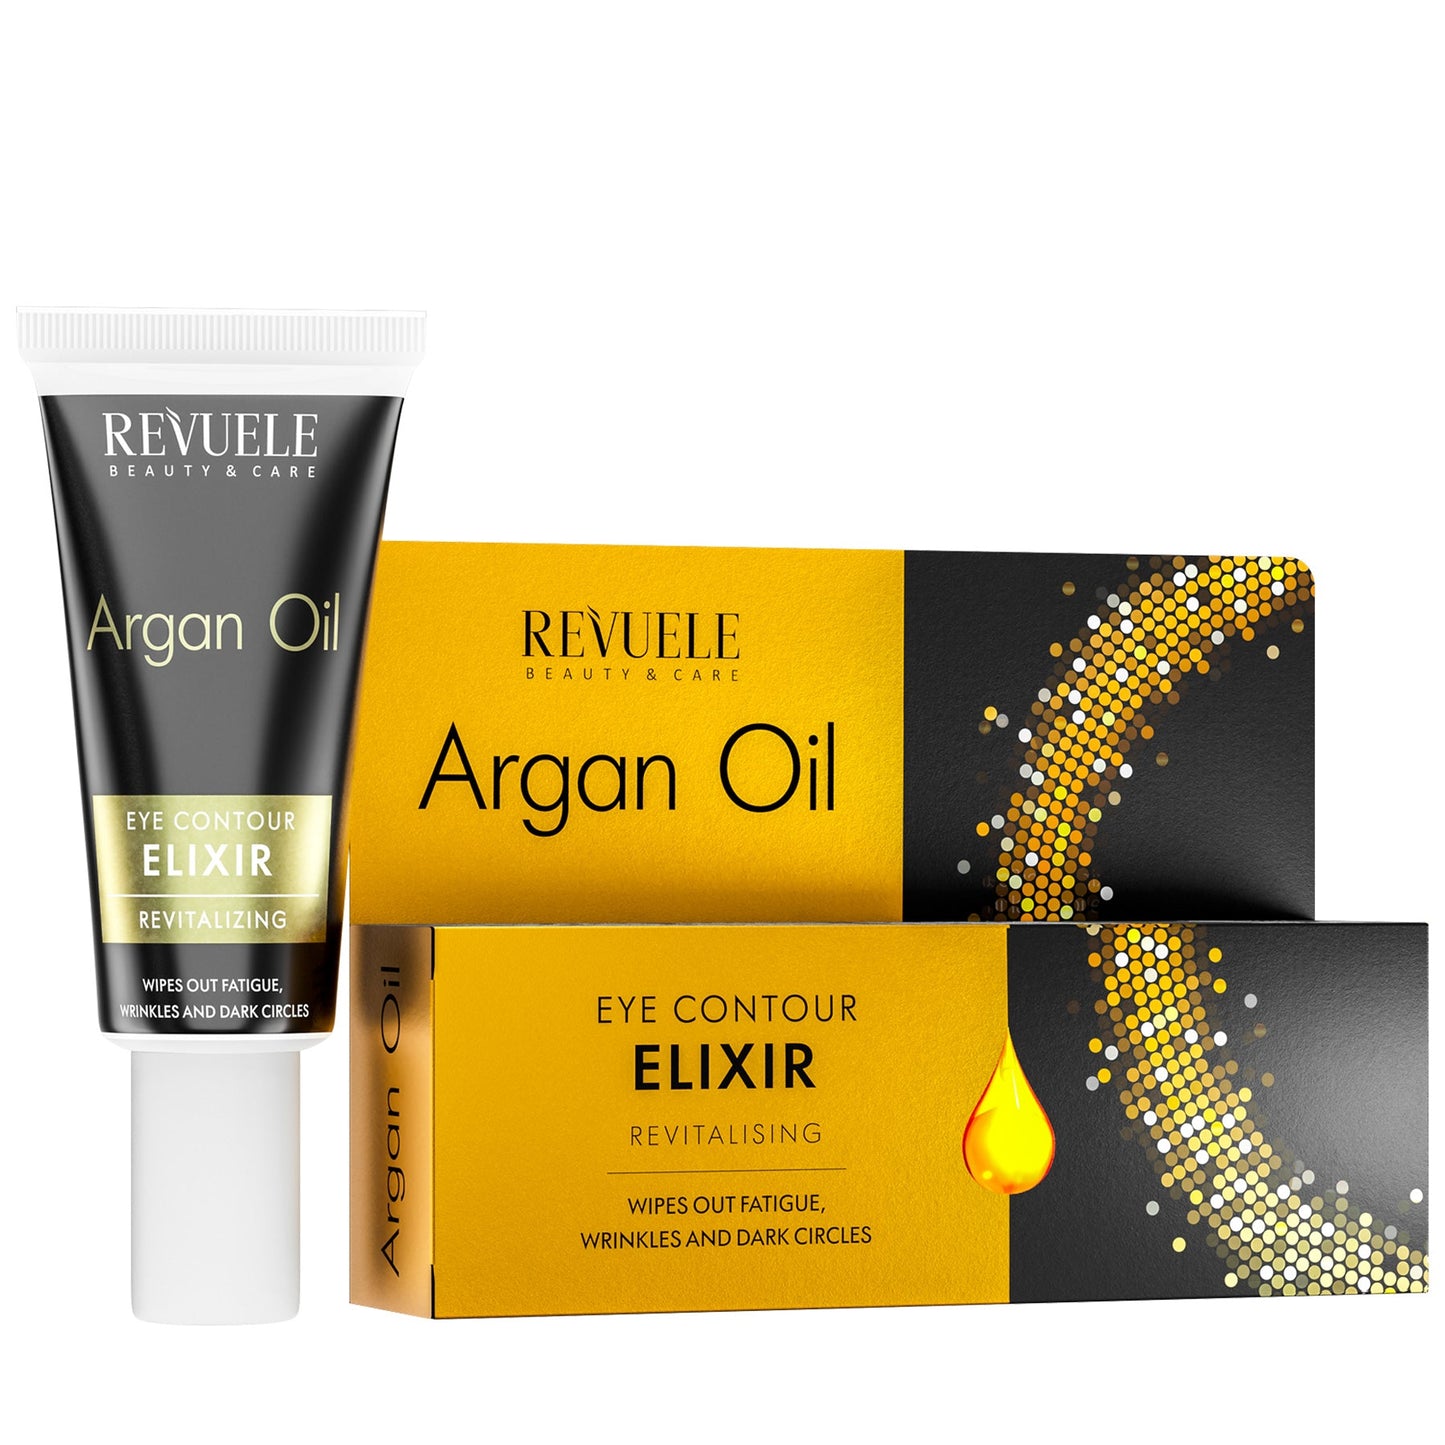 Revuele Argan Oil Eye Contour Elixir Revitalizing